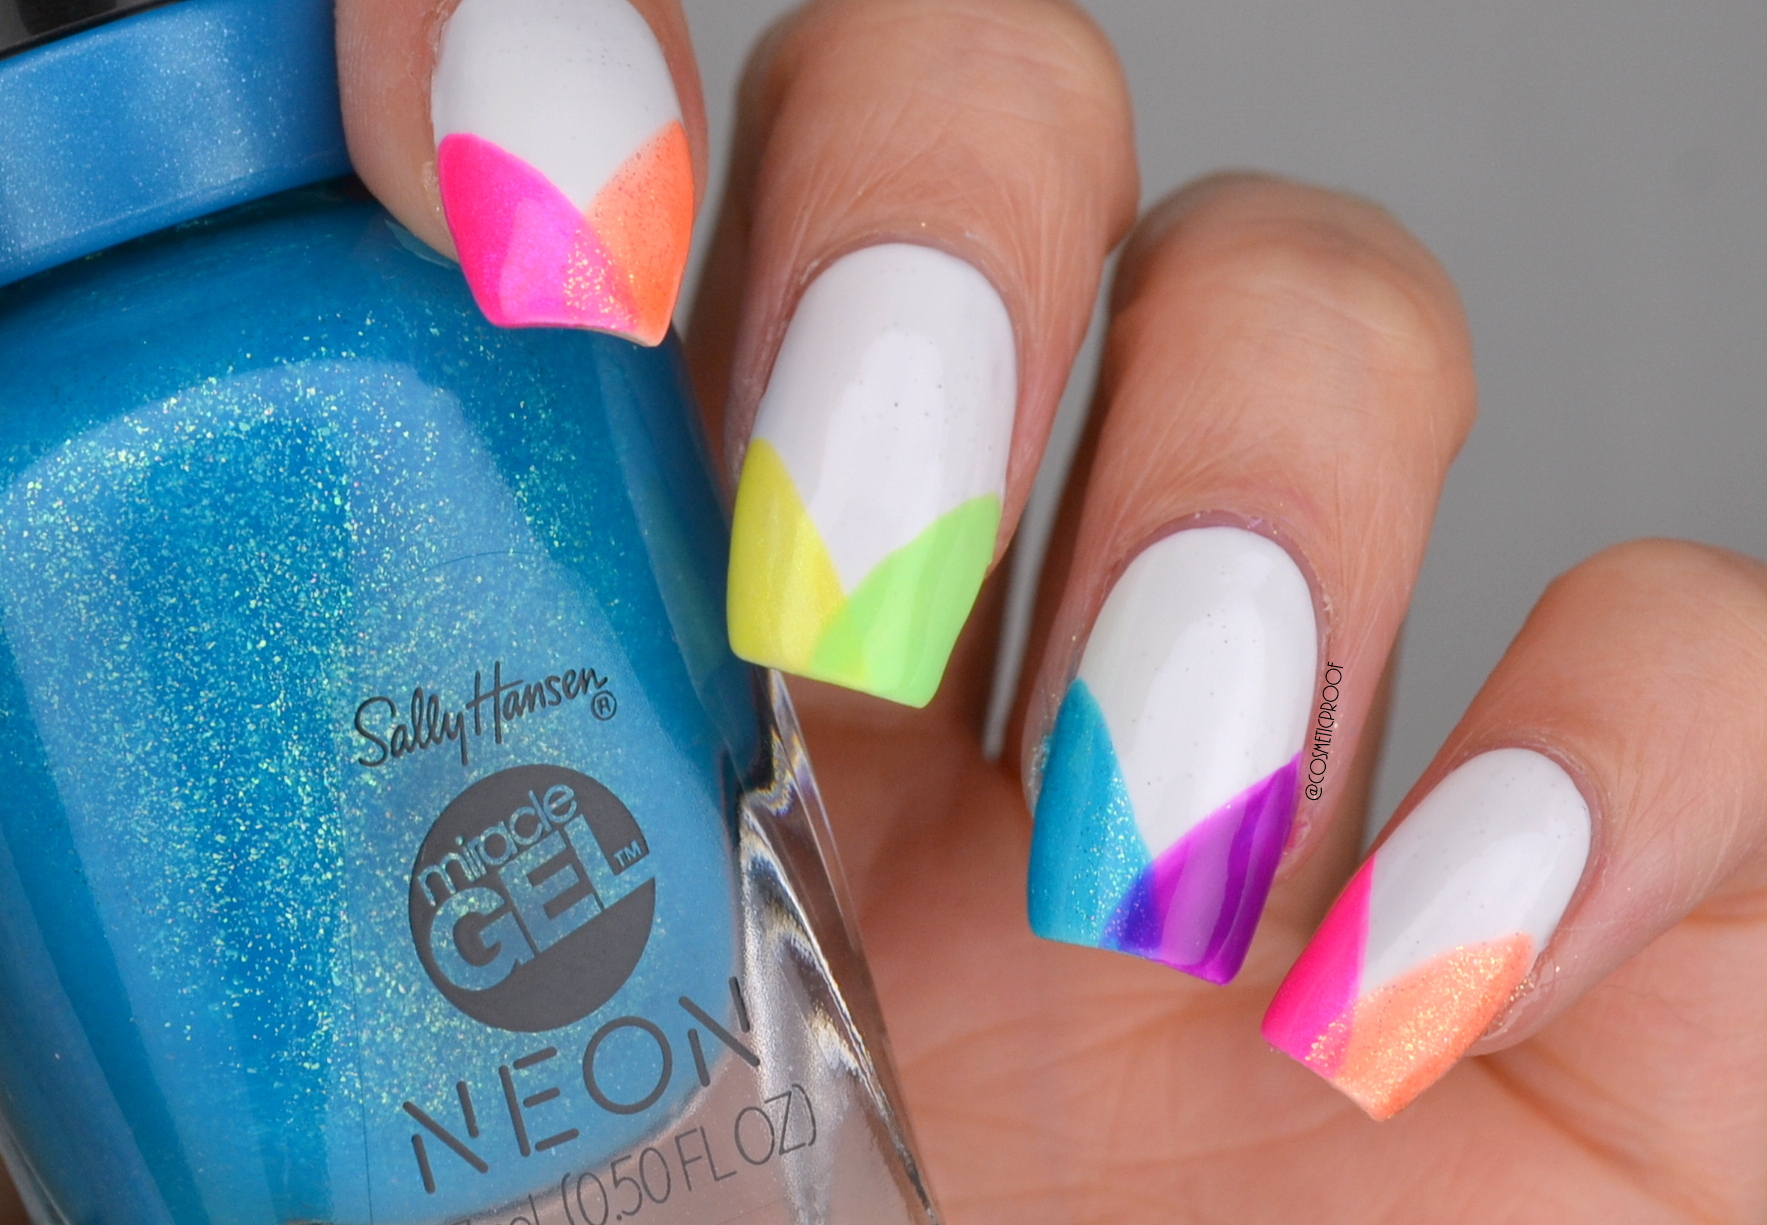 10. "Neon Nail Art Designs" - wide 4